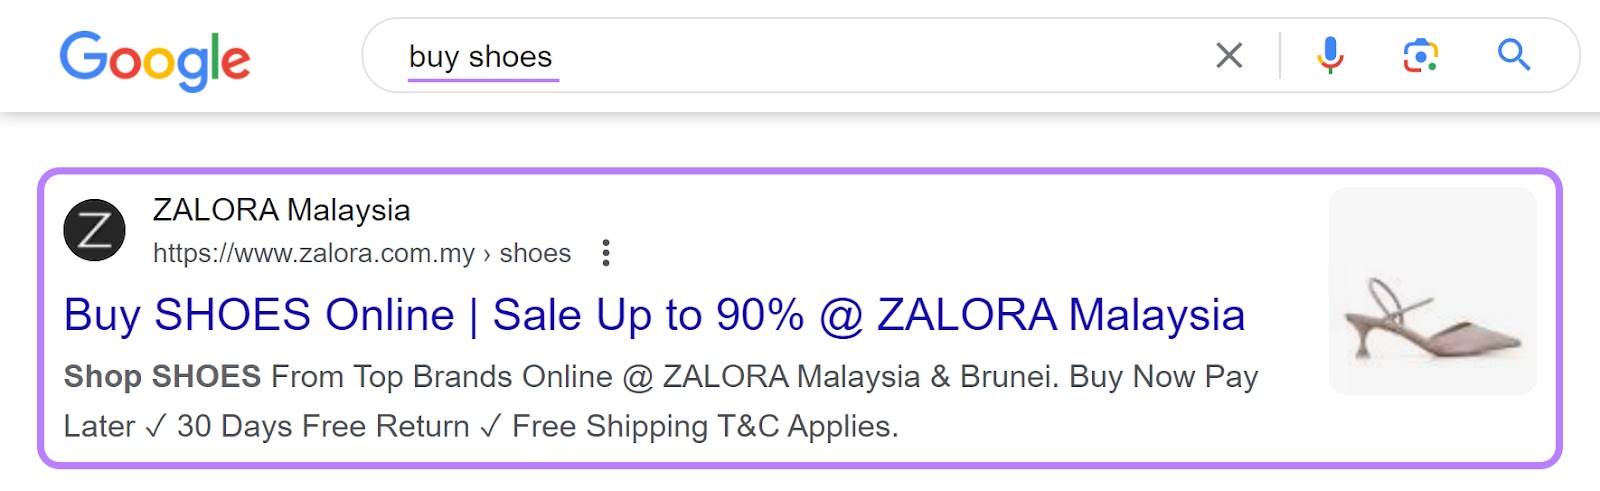 Zalora's PPC advertisement  for "buy shoes" keyword